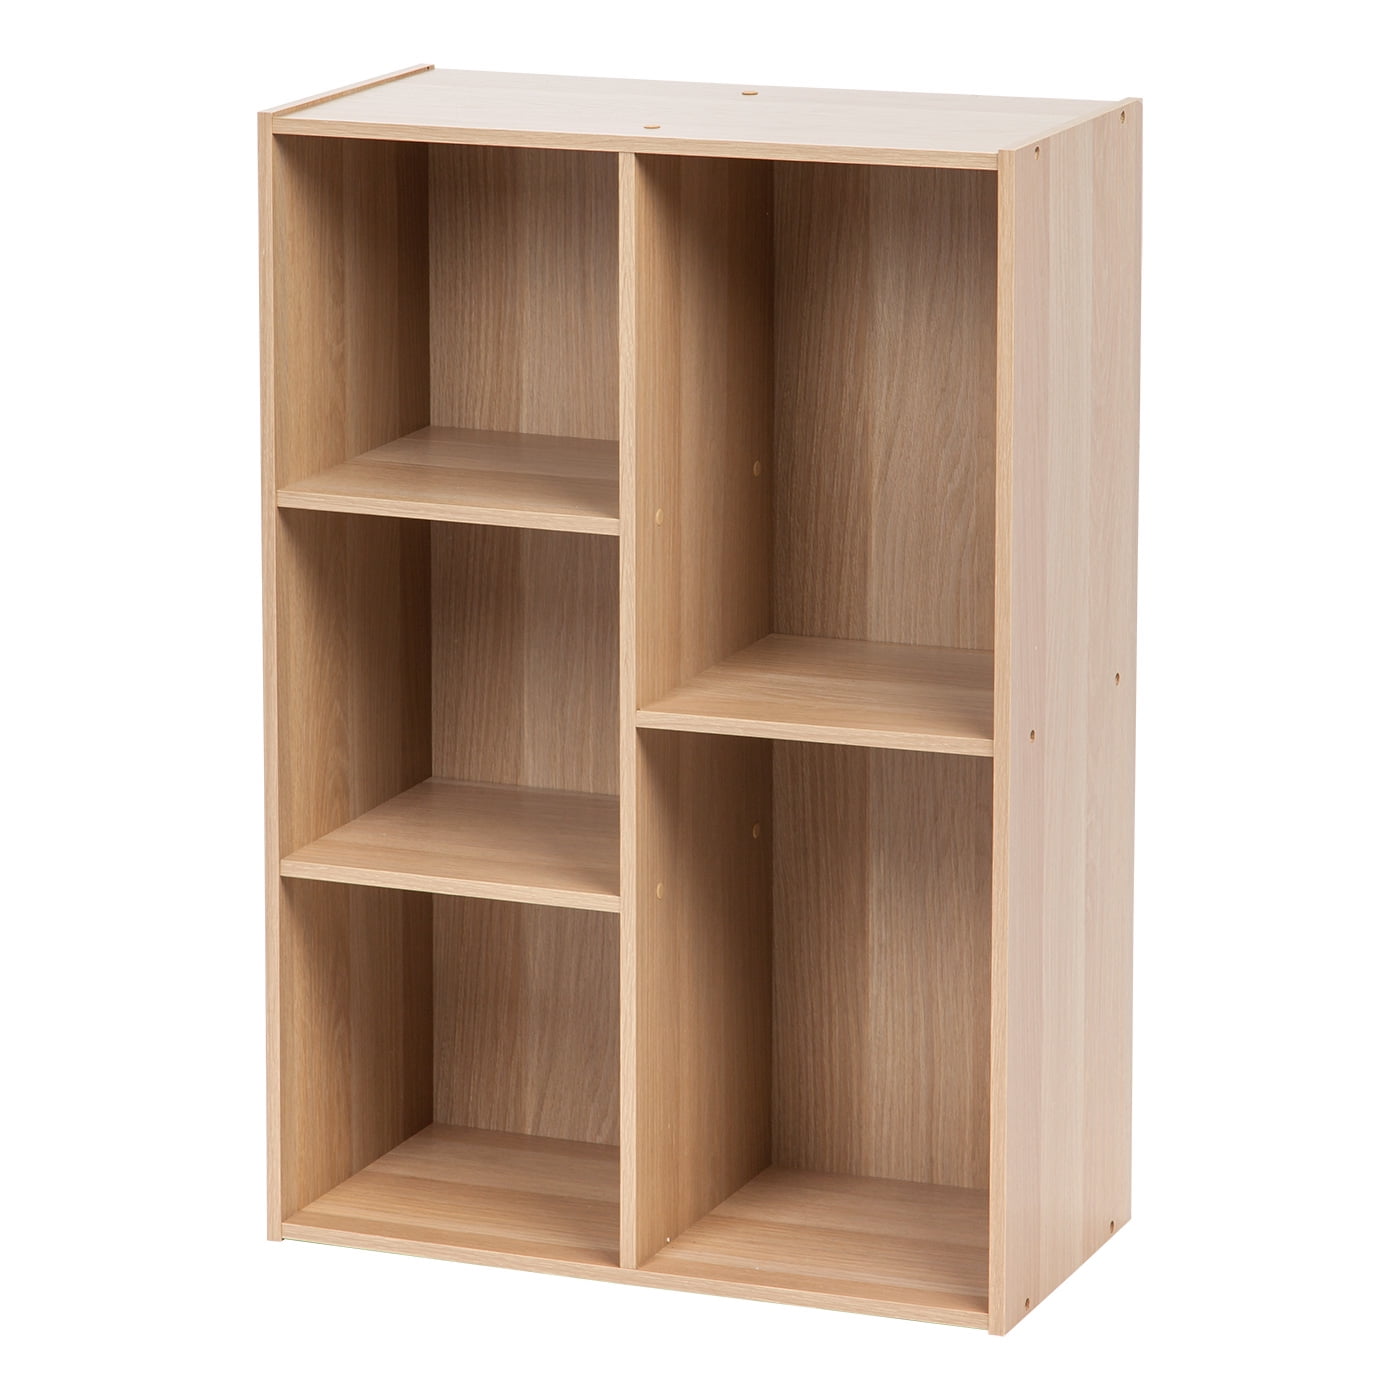 Iris Modular Wood Storage Organizer Cube Box with Adjustable Shelves, Dark Brown